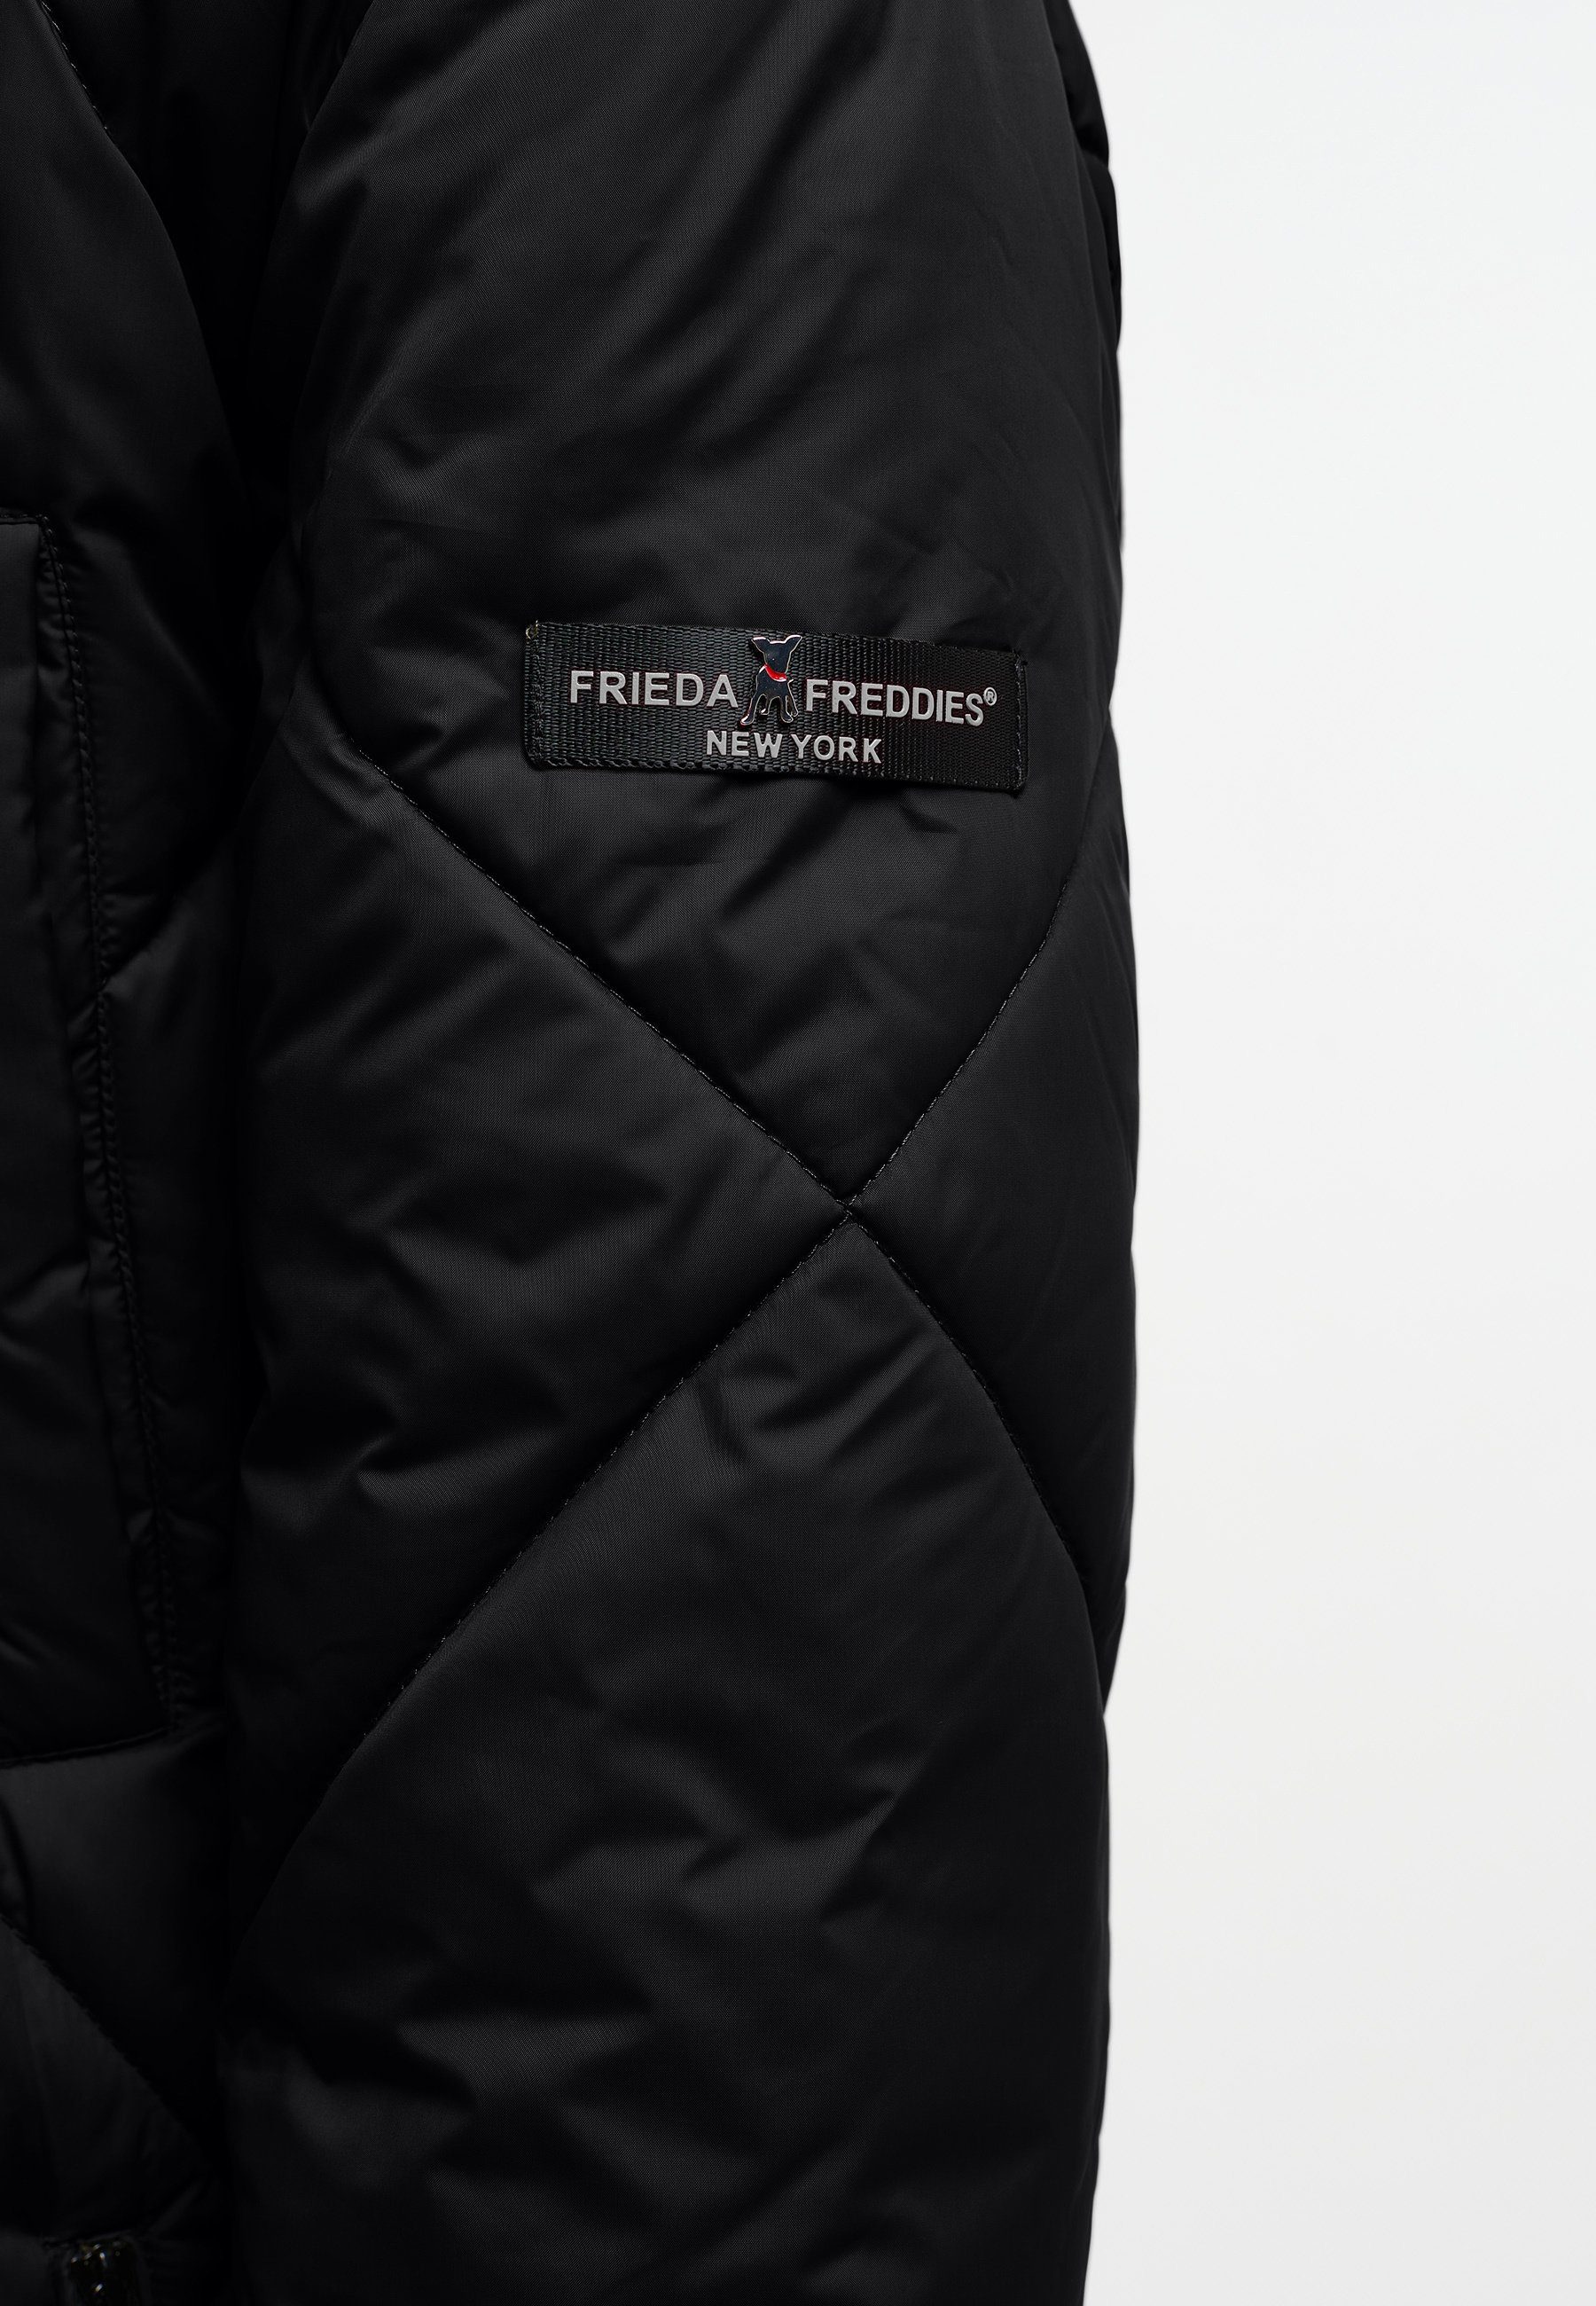 Frieda & Freddies NY Langmantel Farbdetails BLACK Richelle dezenten mit Padding Coat